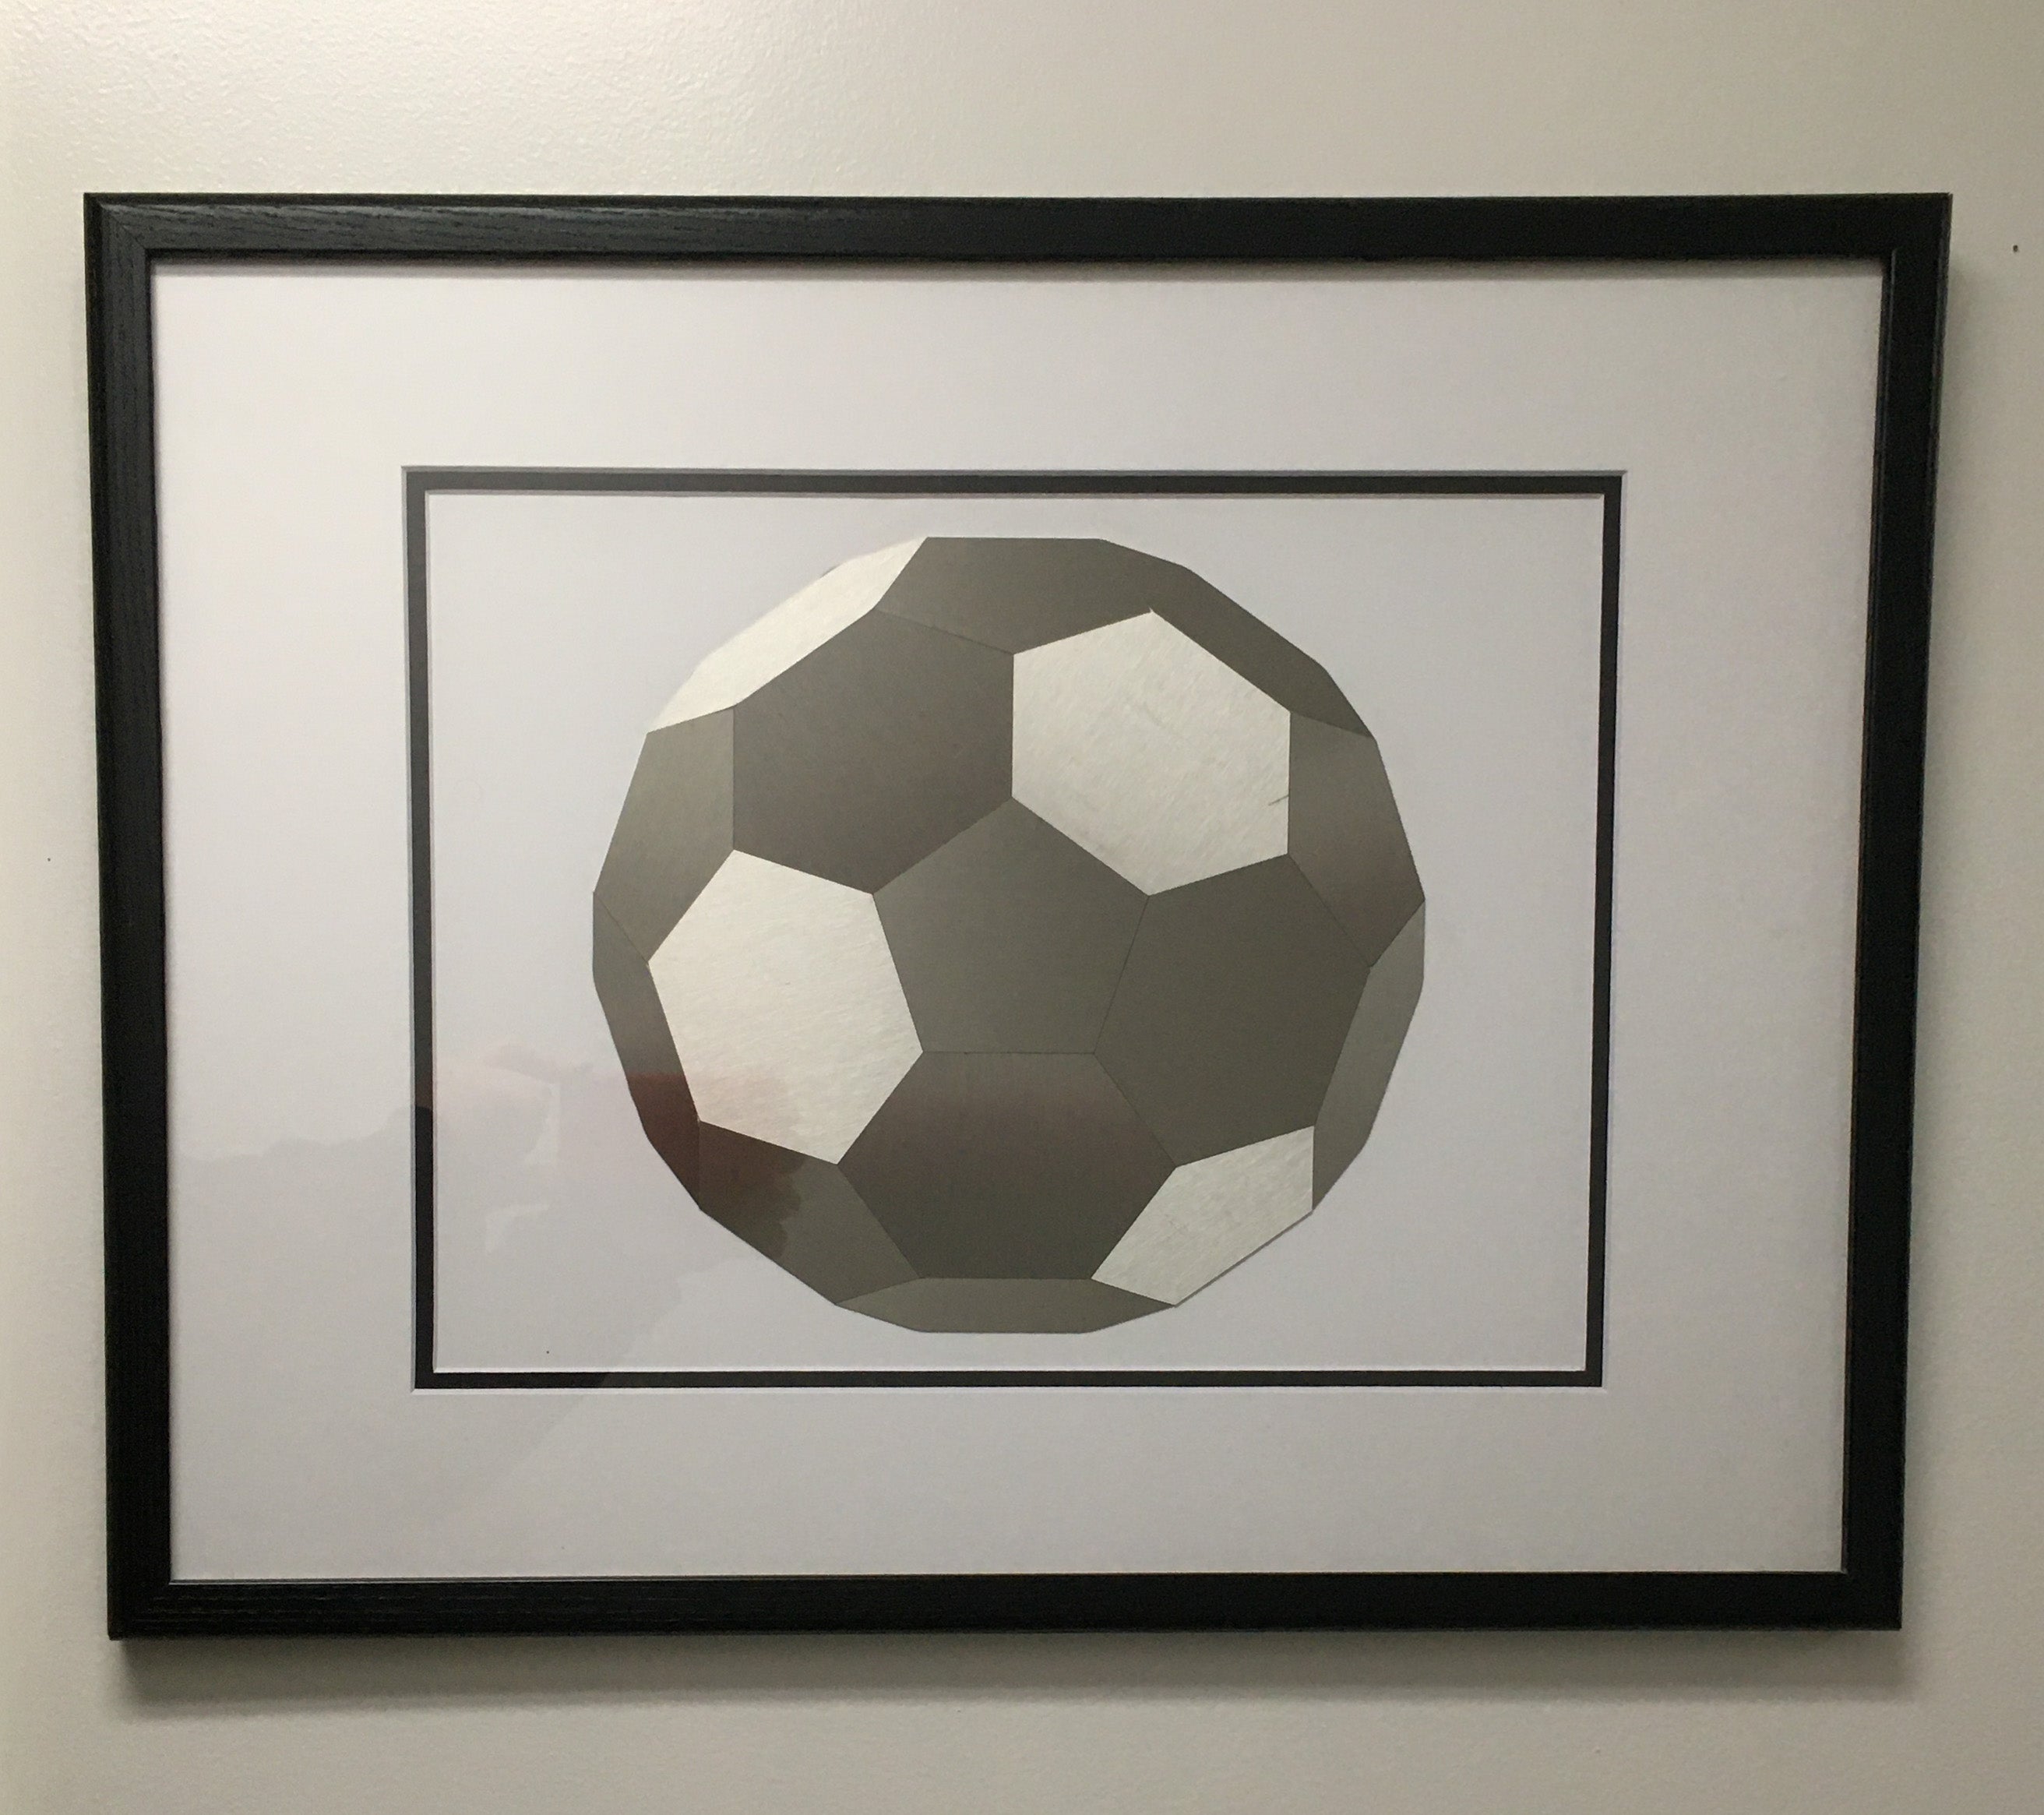 Modern Geometric Polygonal Stainless Steel Silhouette Artwork of a Soccer Ball Glass Framed in a 16 x 20 Wooden Frame